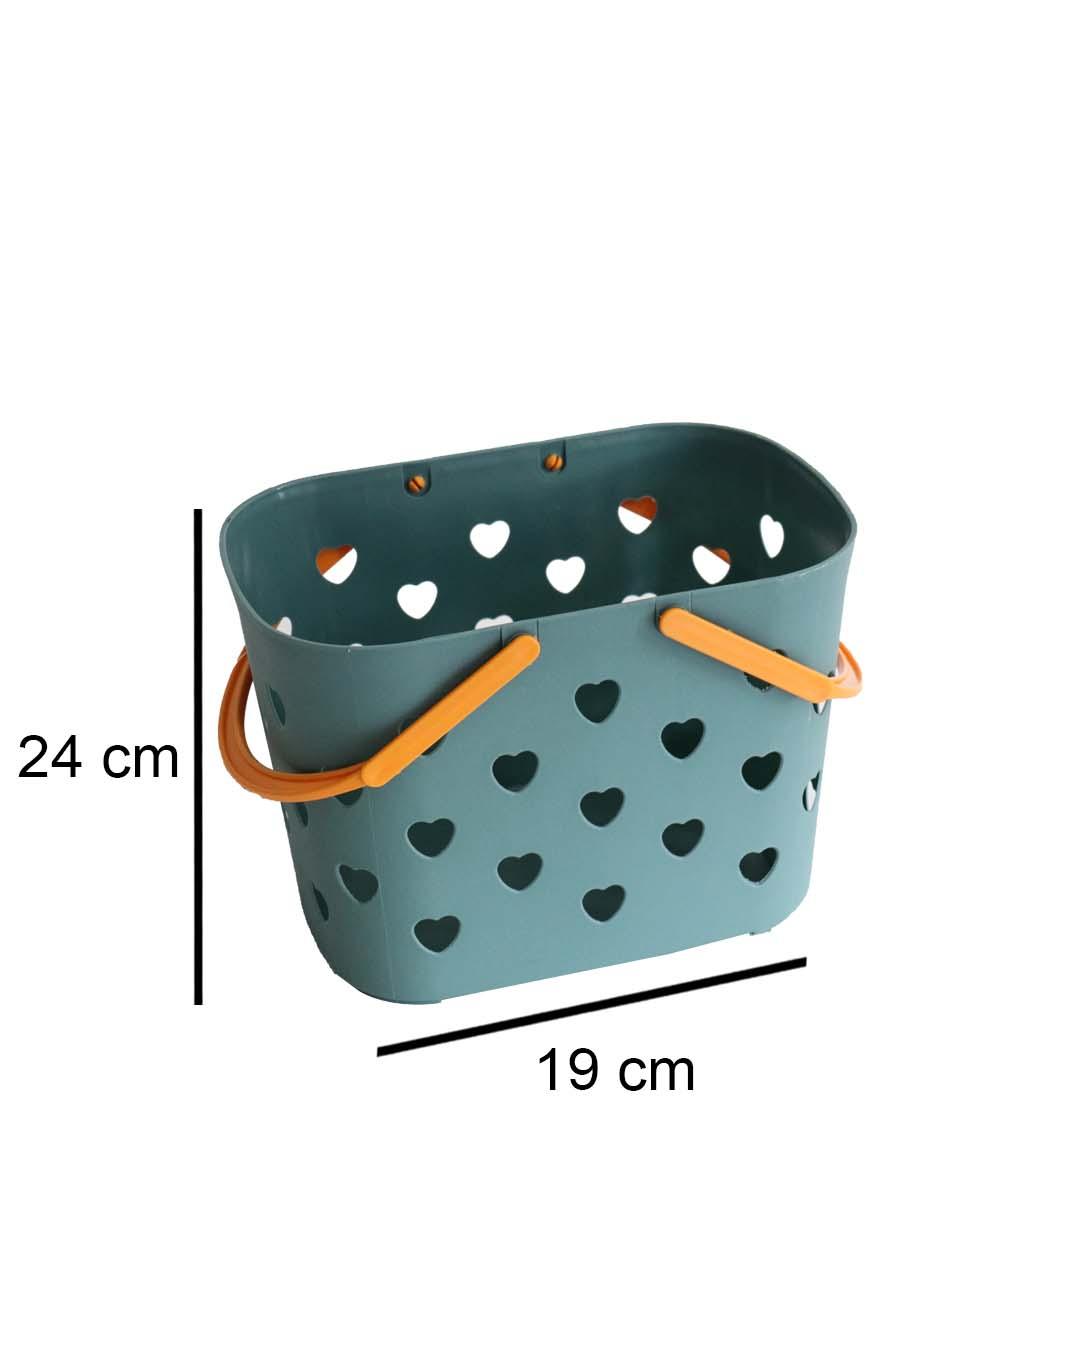 Basket with Handles, Heart Shaped Cut Design, Deep Sea Green, Plastic - MARKET 99